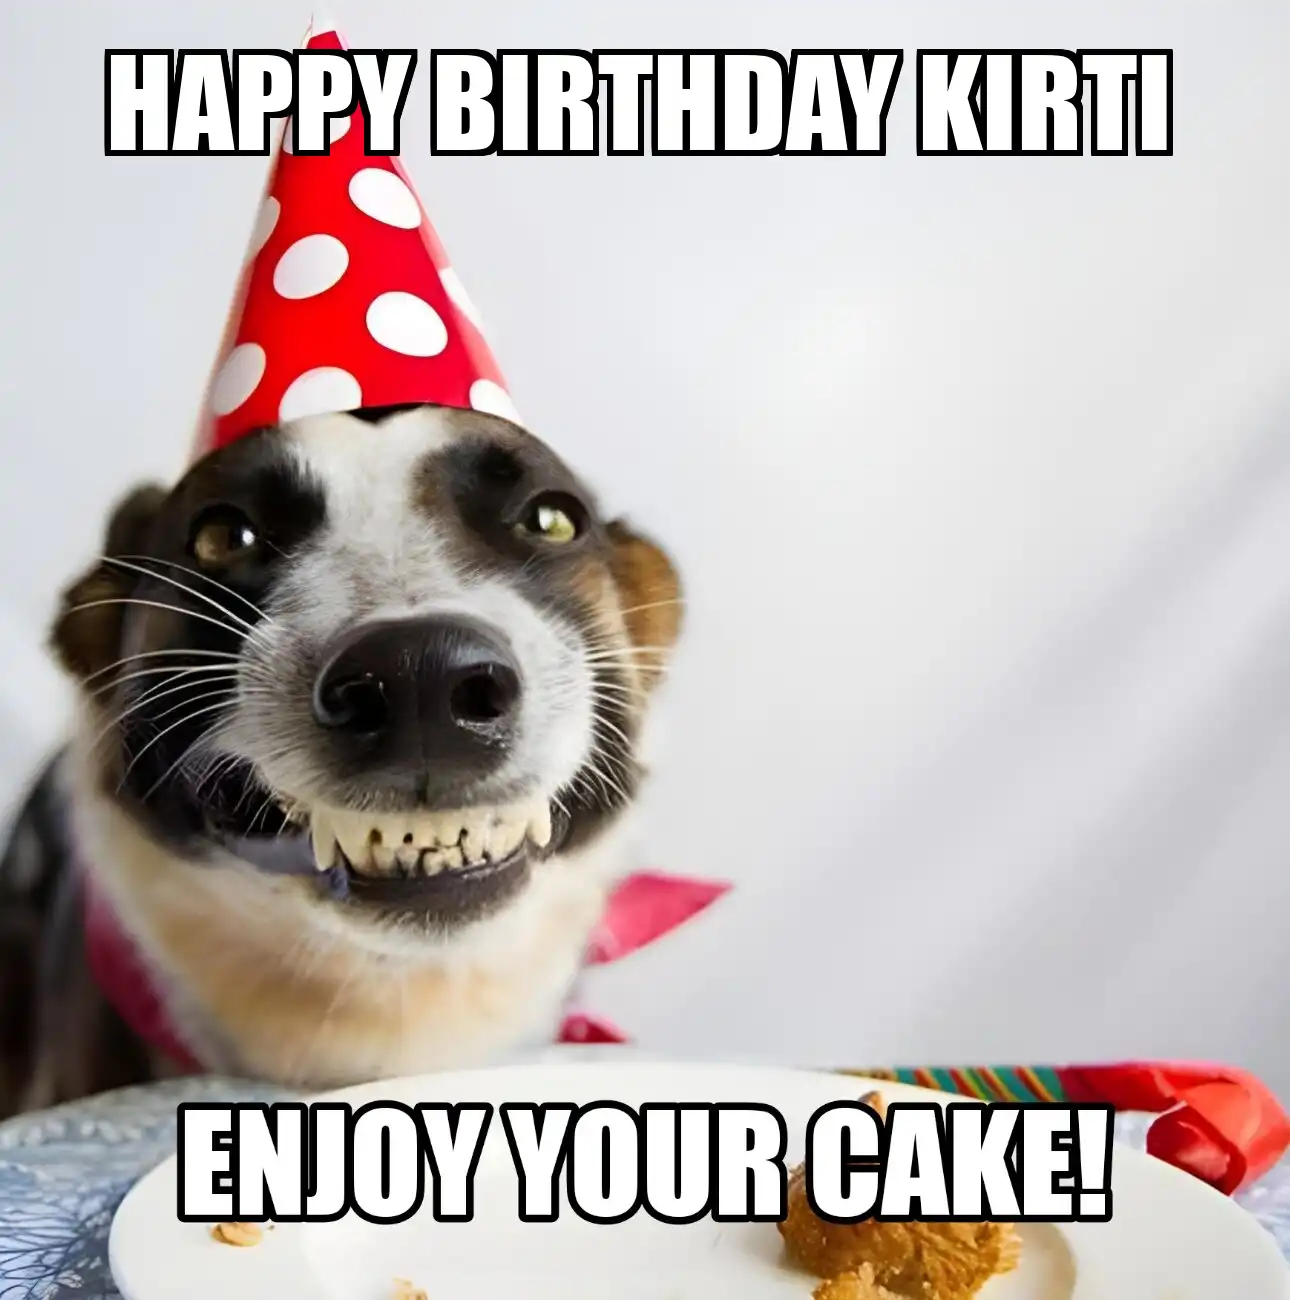 Happy Birthday Kirti Enjoy Your Cake Dog Meme